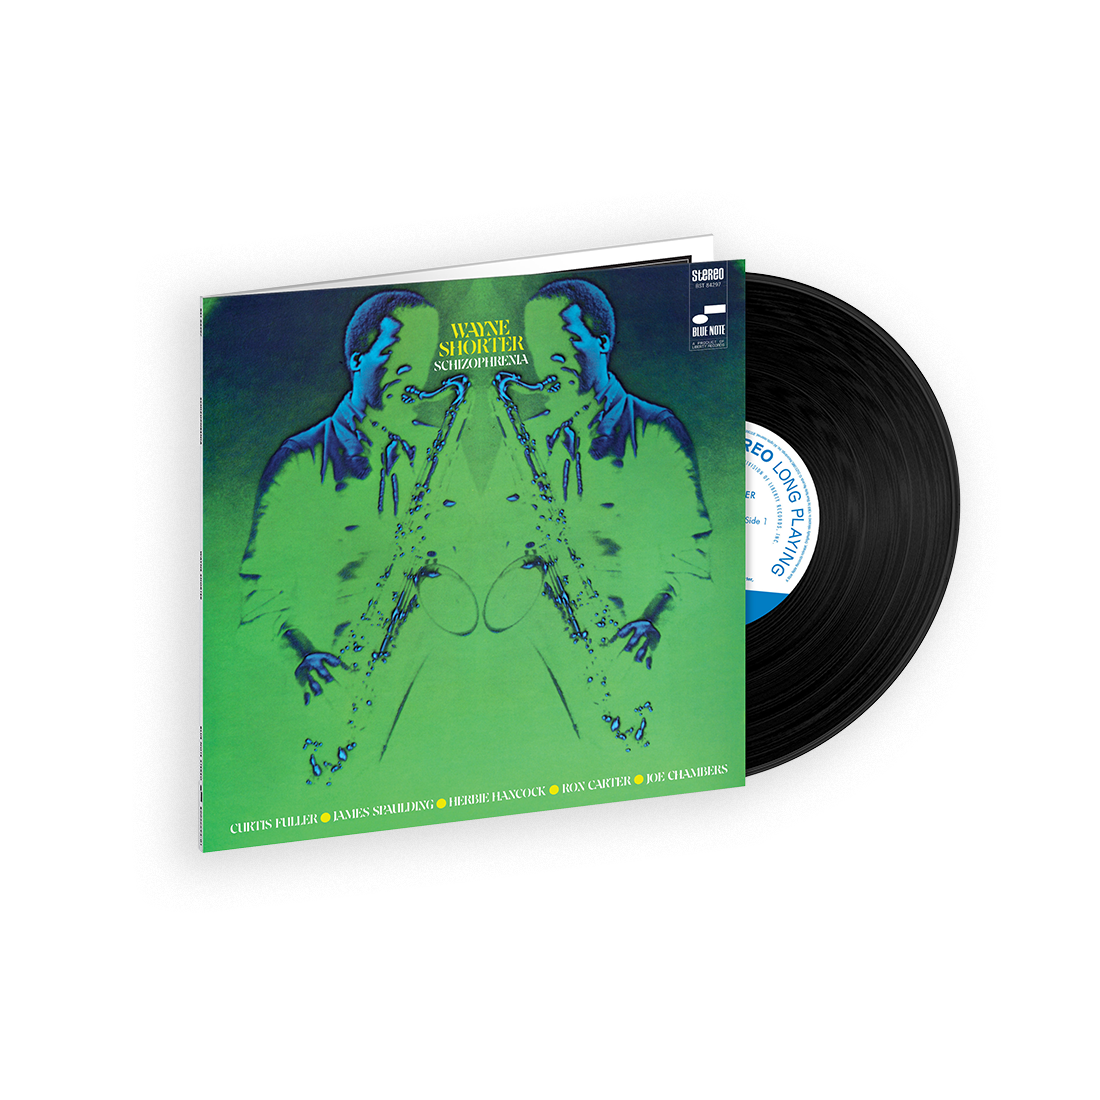 Wayne Shorter - Schizophrenia (Tone Poet Series): Vinyl LP